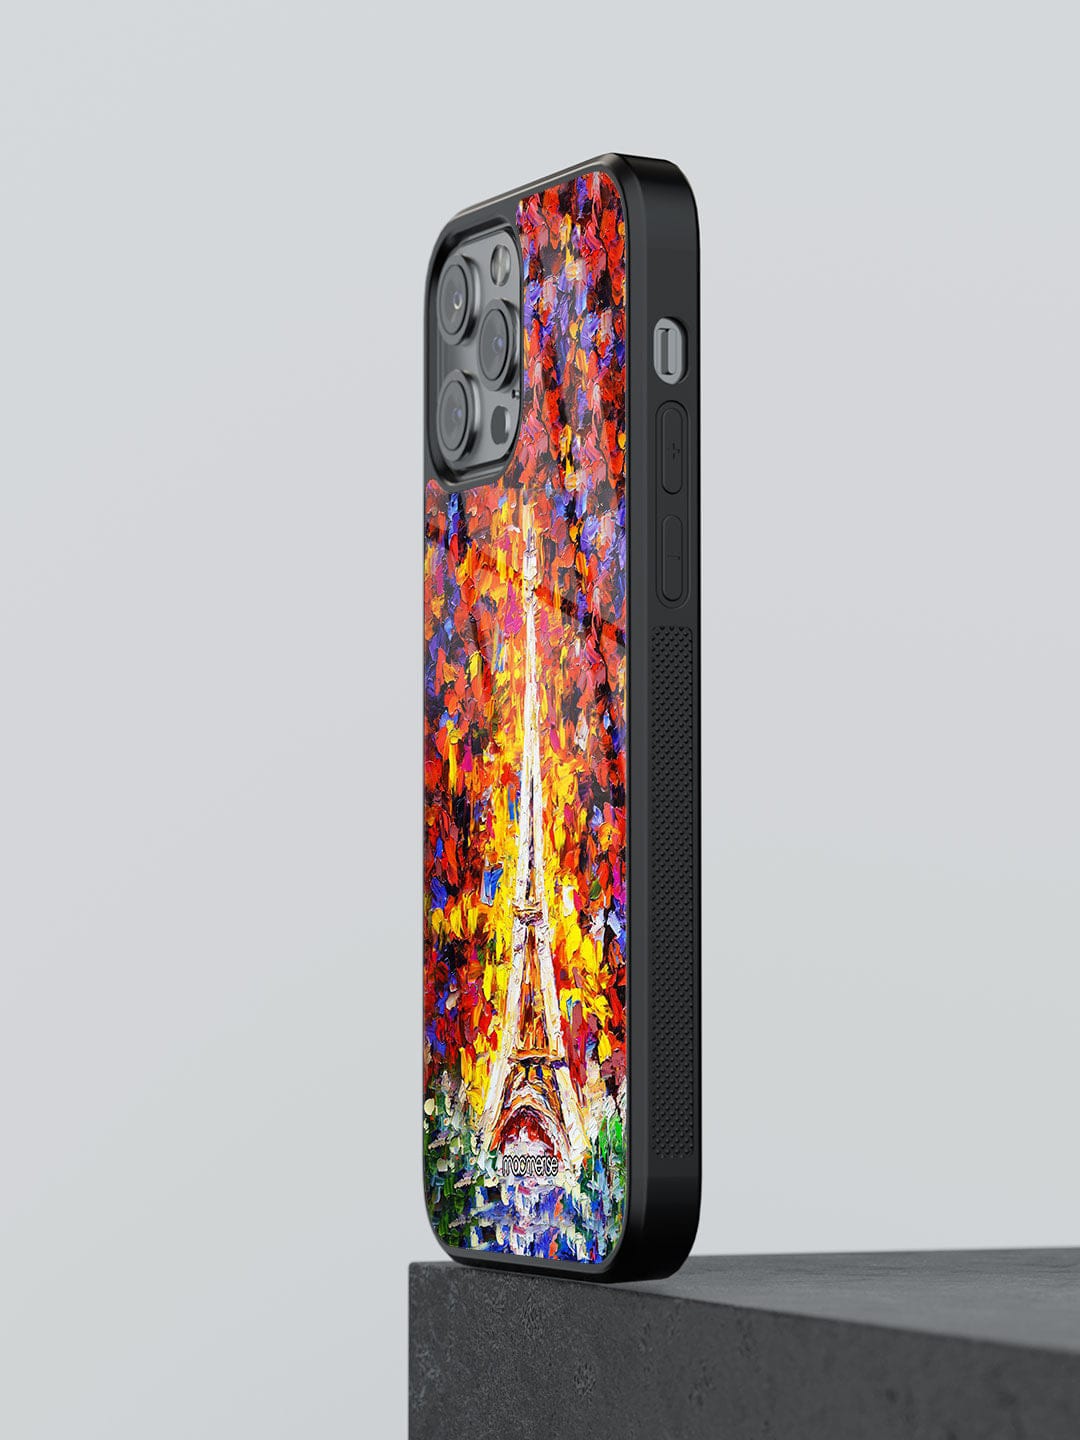 macmerise Red Printed Artistic Eifel iPhone 12 Pro Max Back Case Price in India